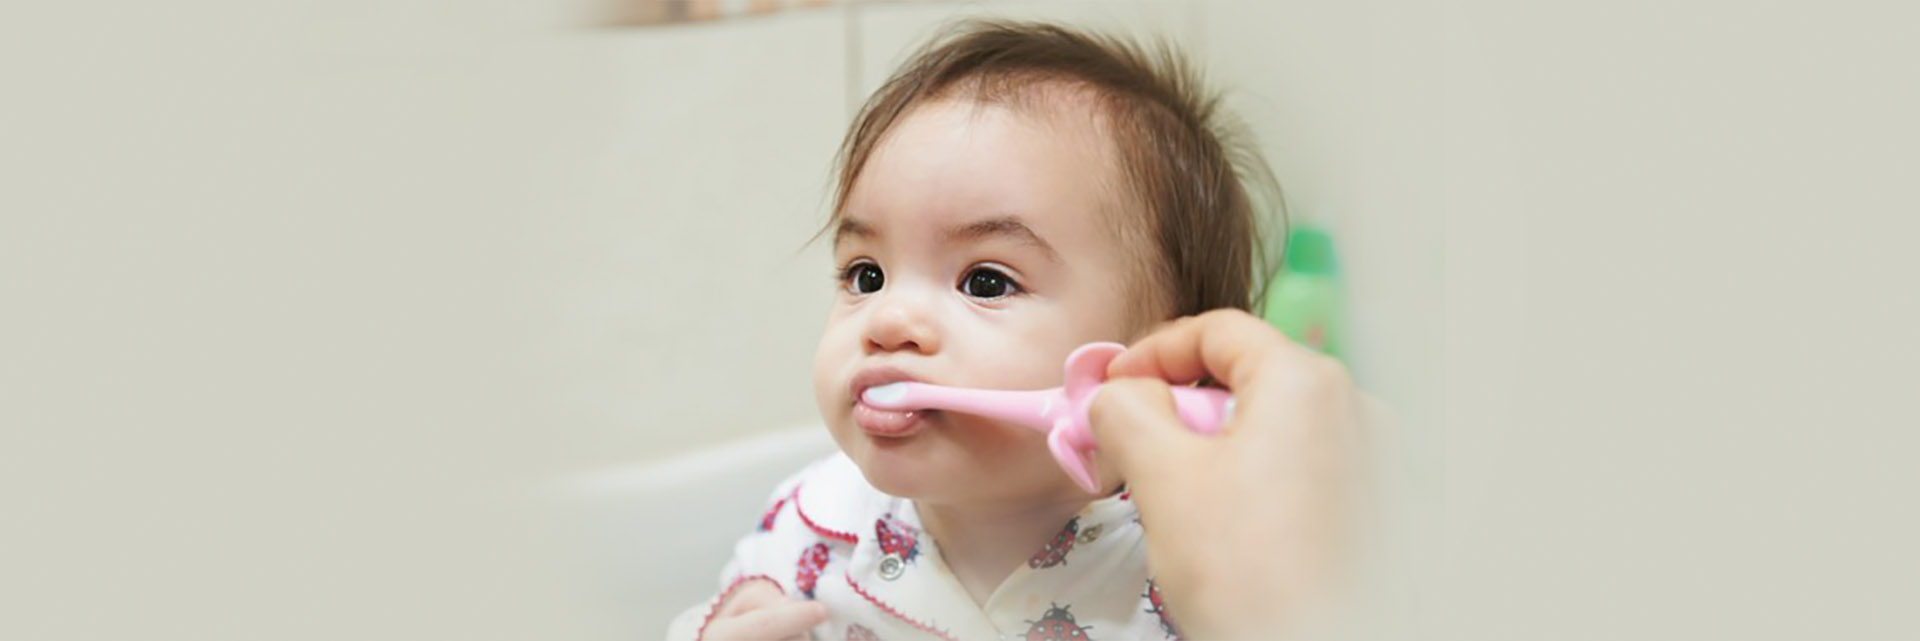 Infant brushing teeth